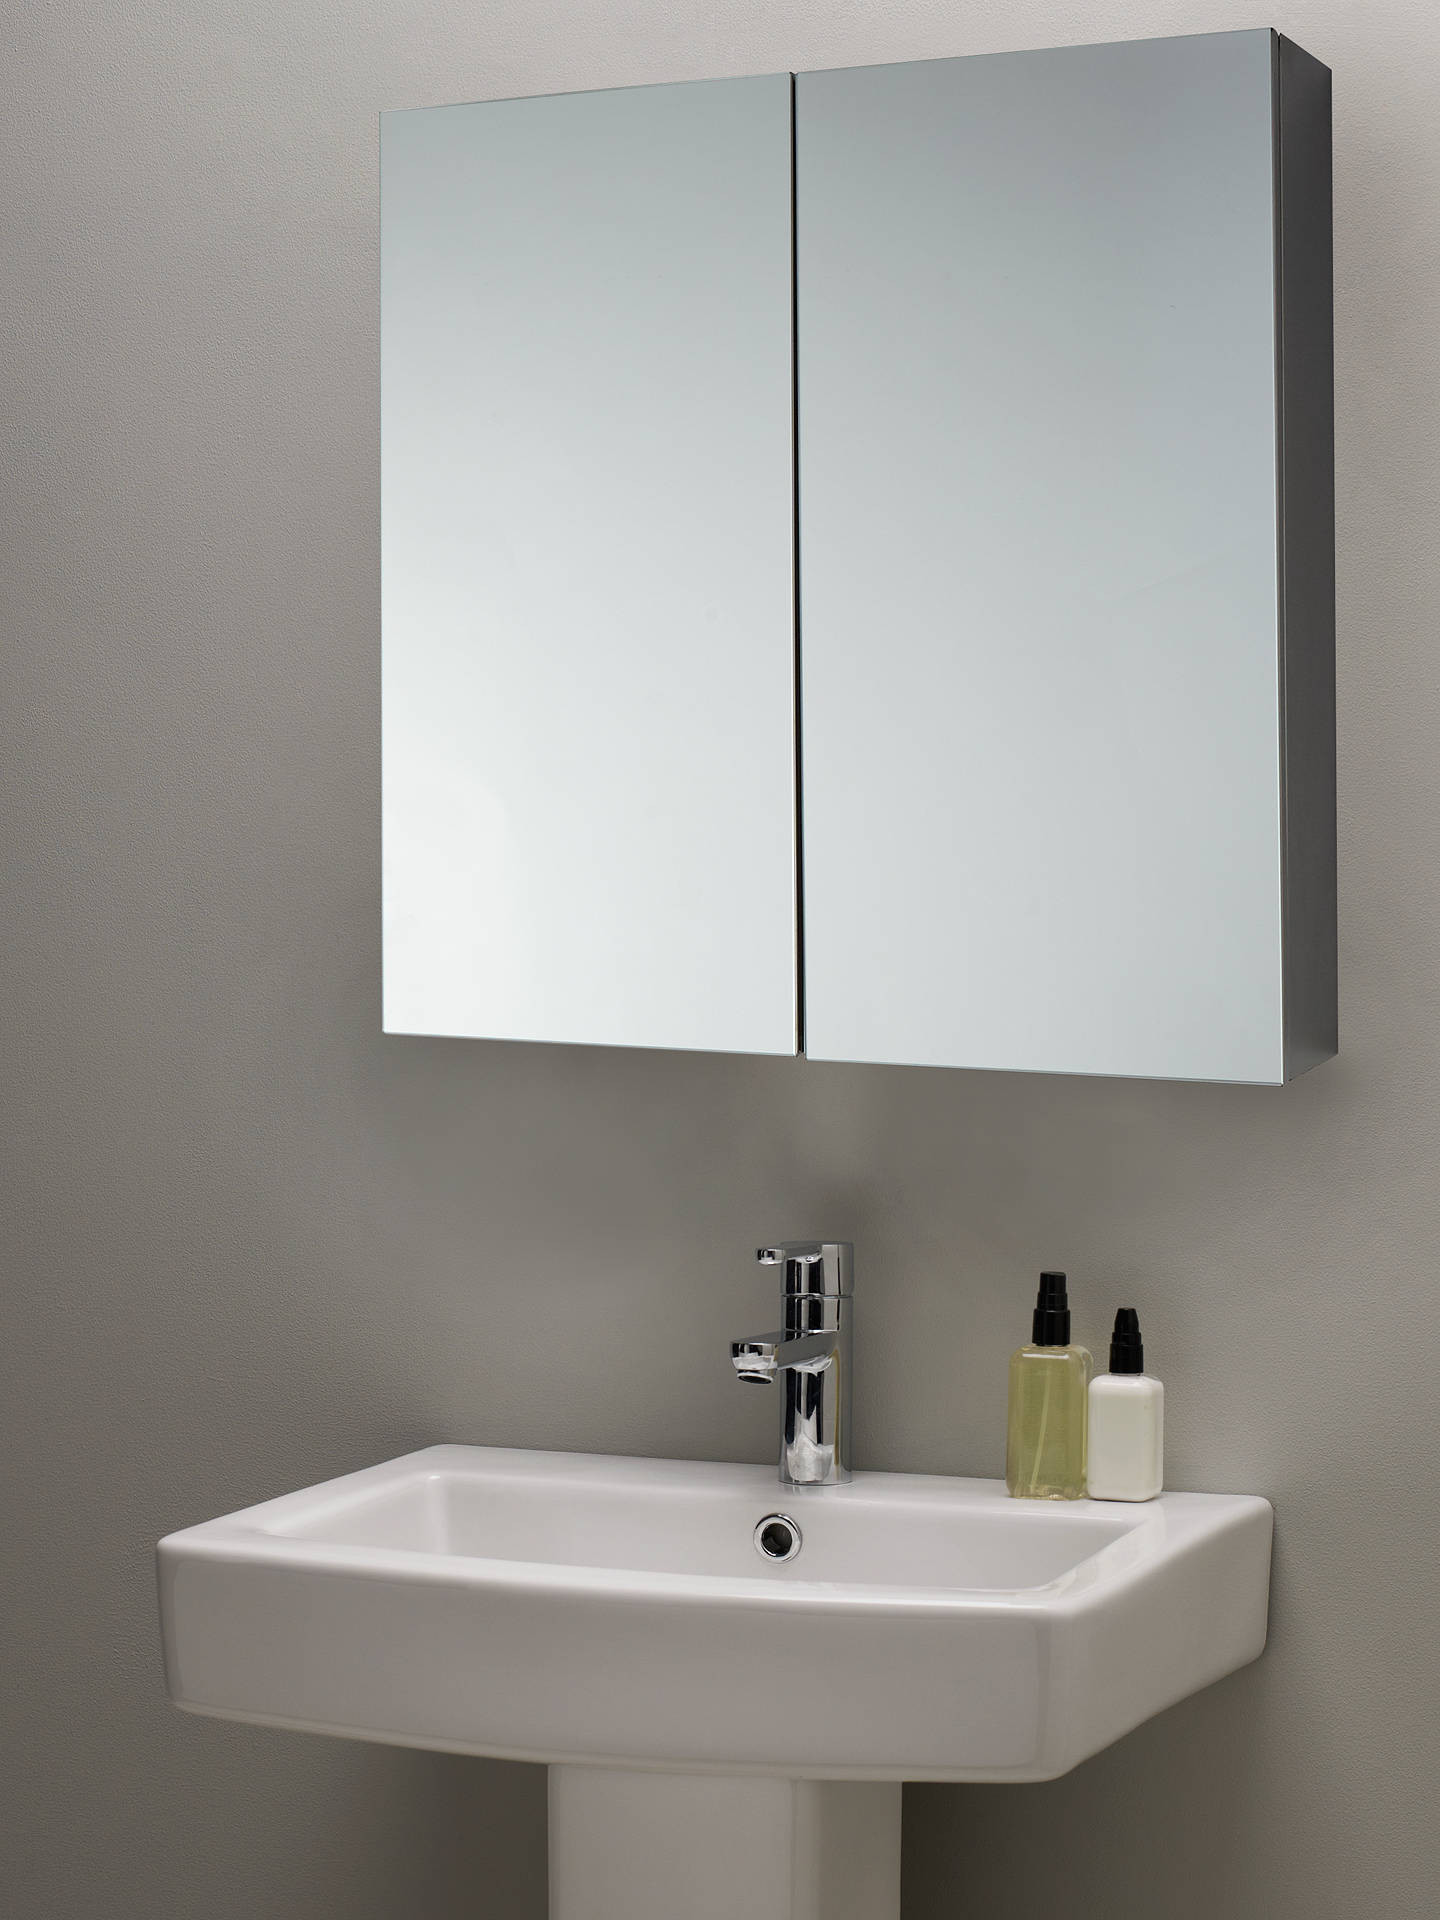 Mirrored Bathroom Cabinet
 John Lewis & Partners Double Mirrored Bathroom Cabinet